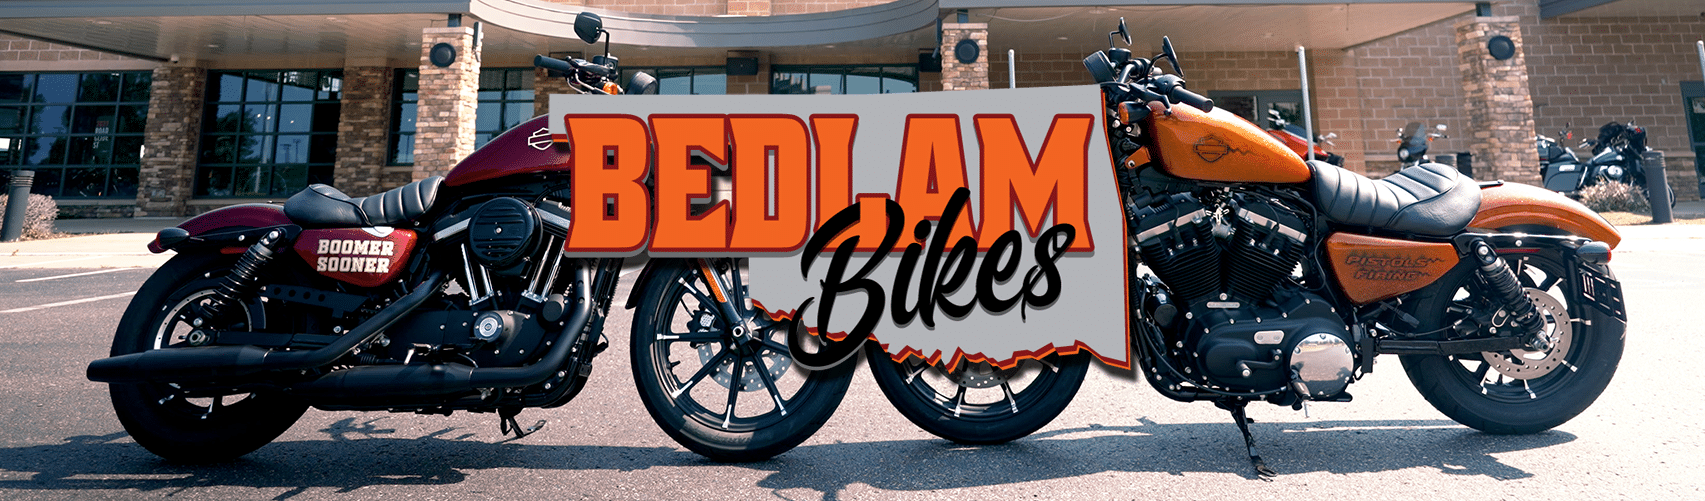 Bedlam Bikes motorcycle giveaway